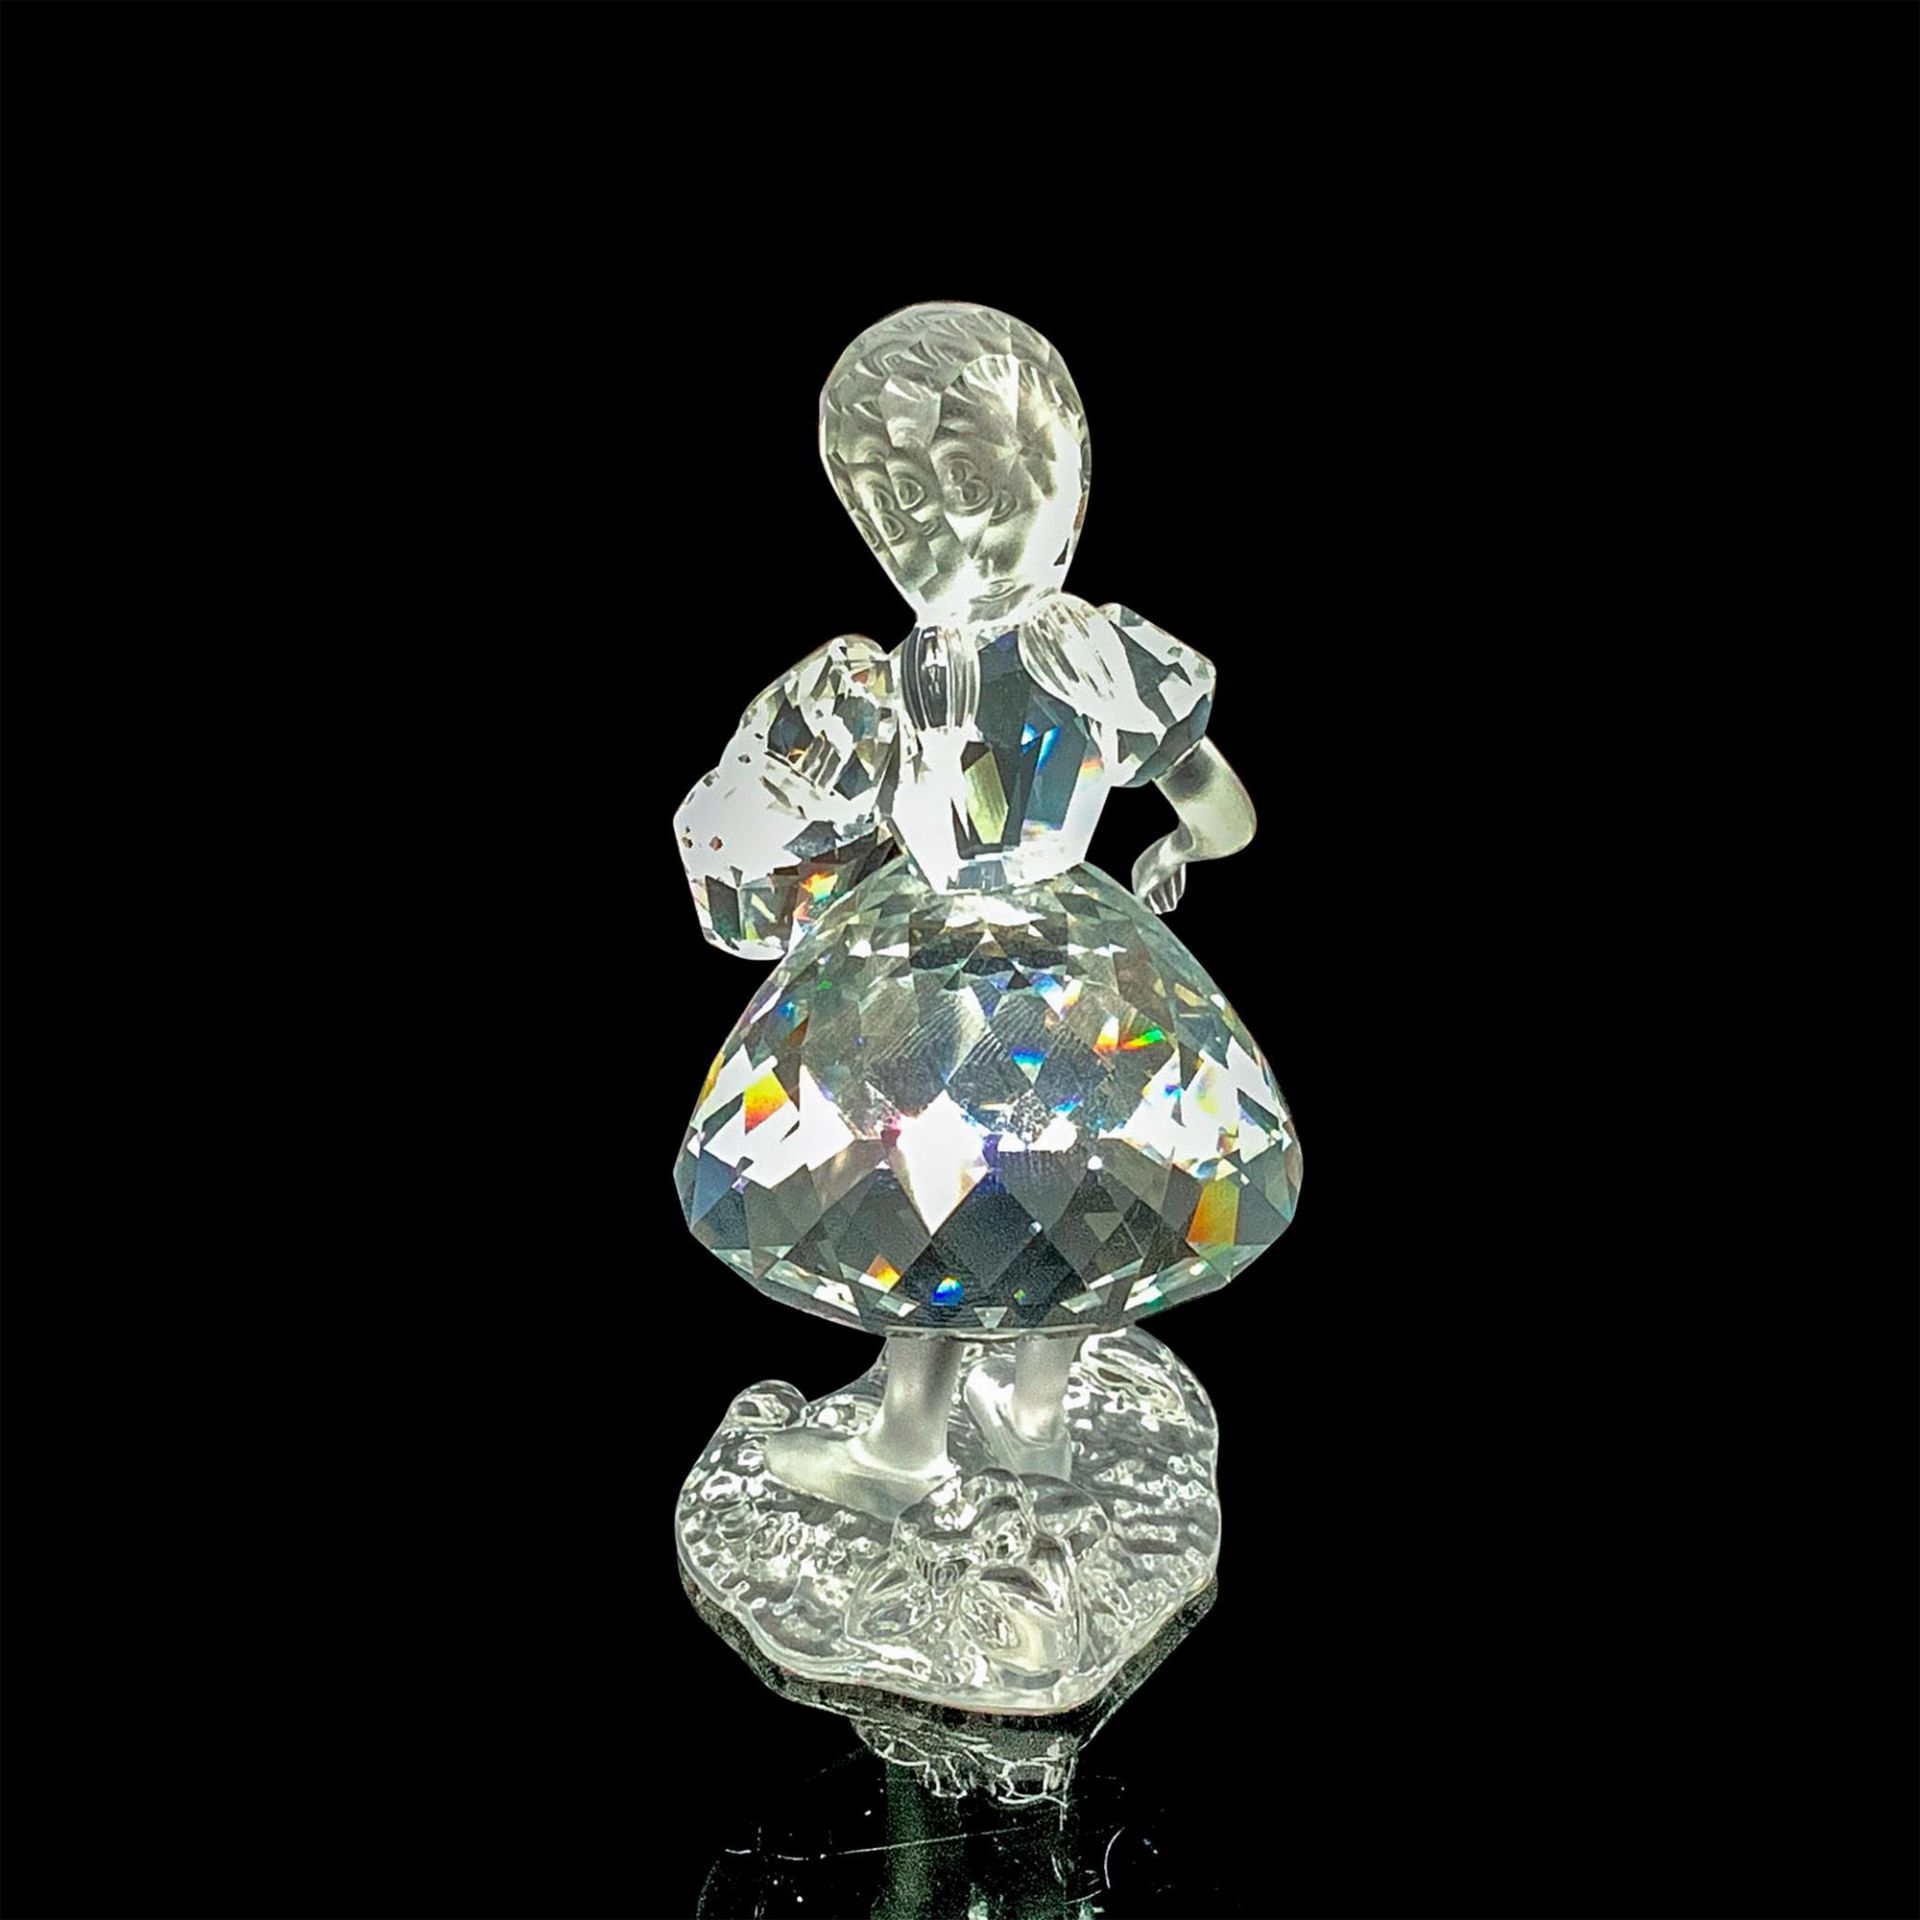 Swarovski Crystal Figurine, Red Riding Hood - Image 2 of 4